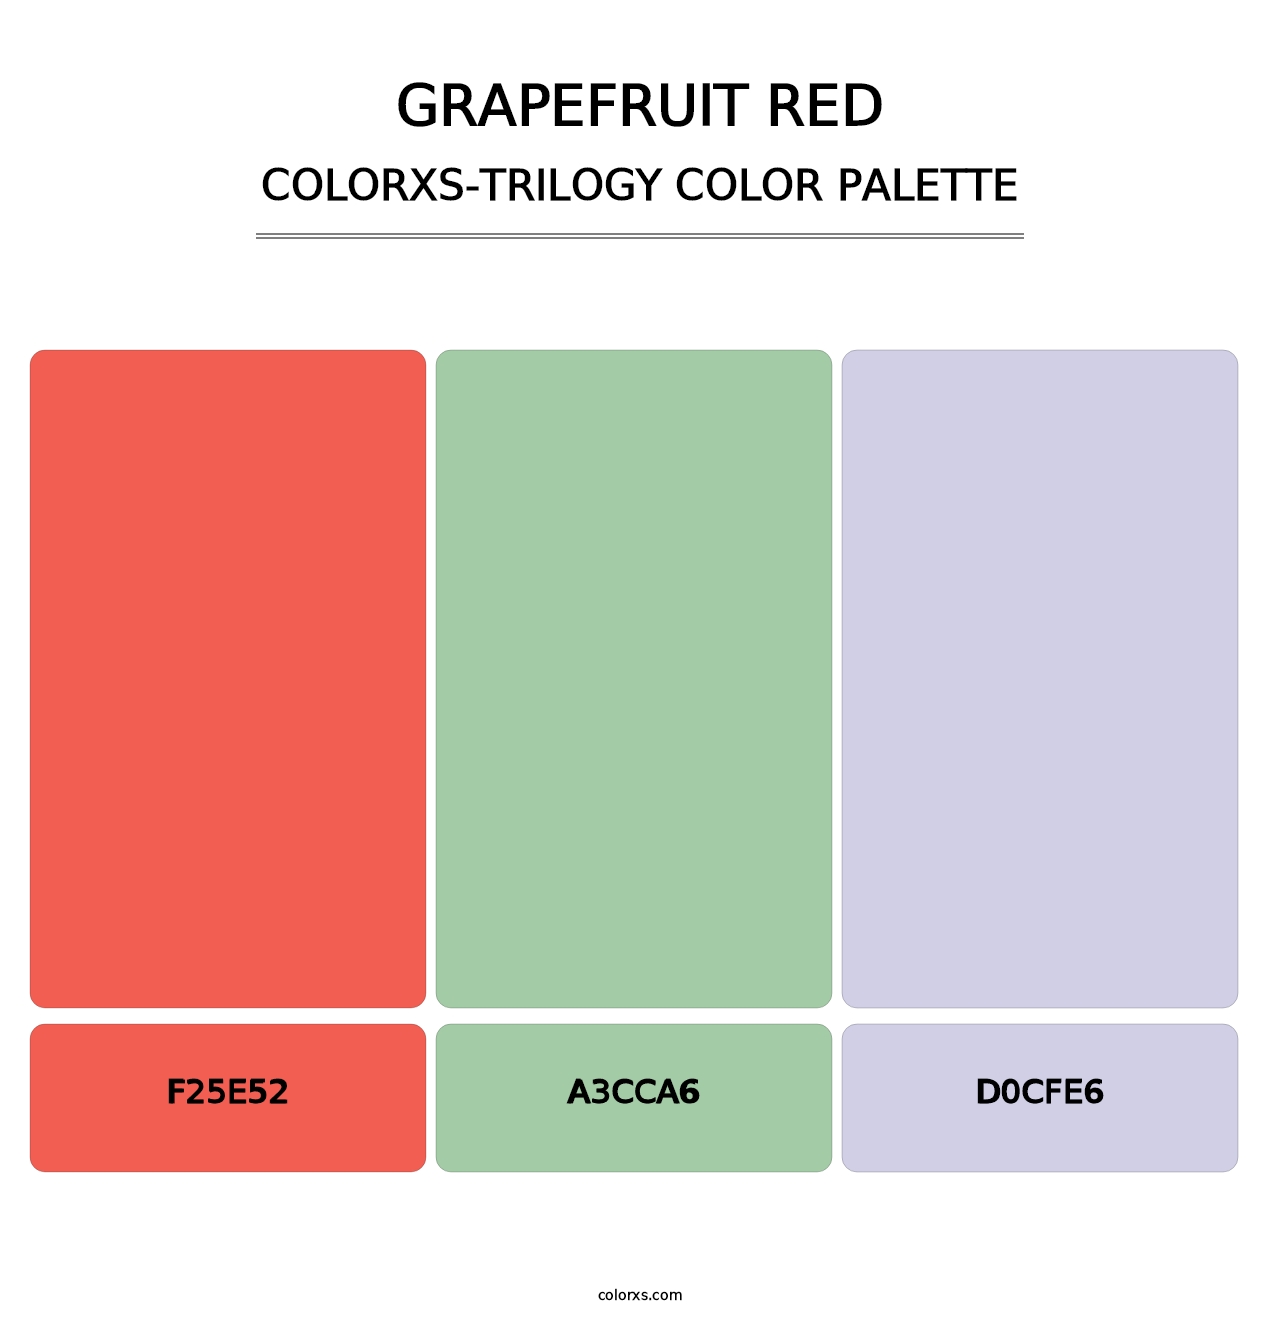 Grapefruit Red - Colorxs Trilogy Palette